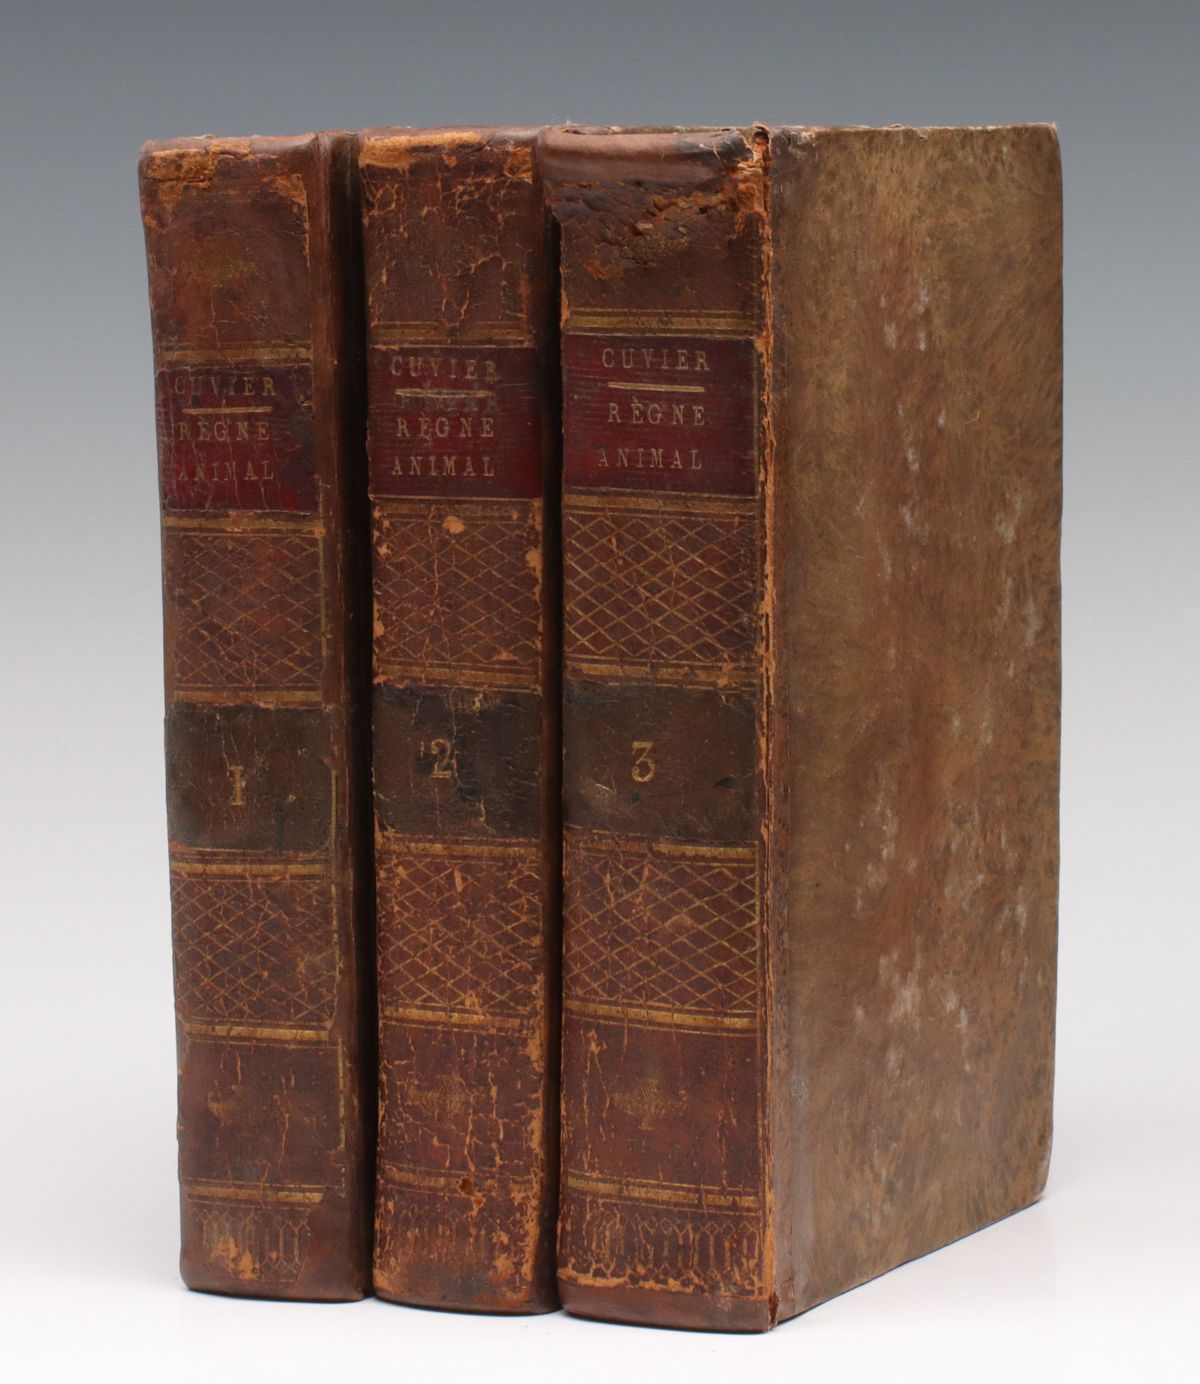 CUVIER, GEORGES, THE ANIMAL KINGDOM, THREE VOLS 1817